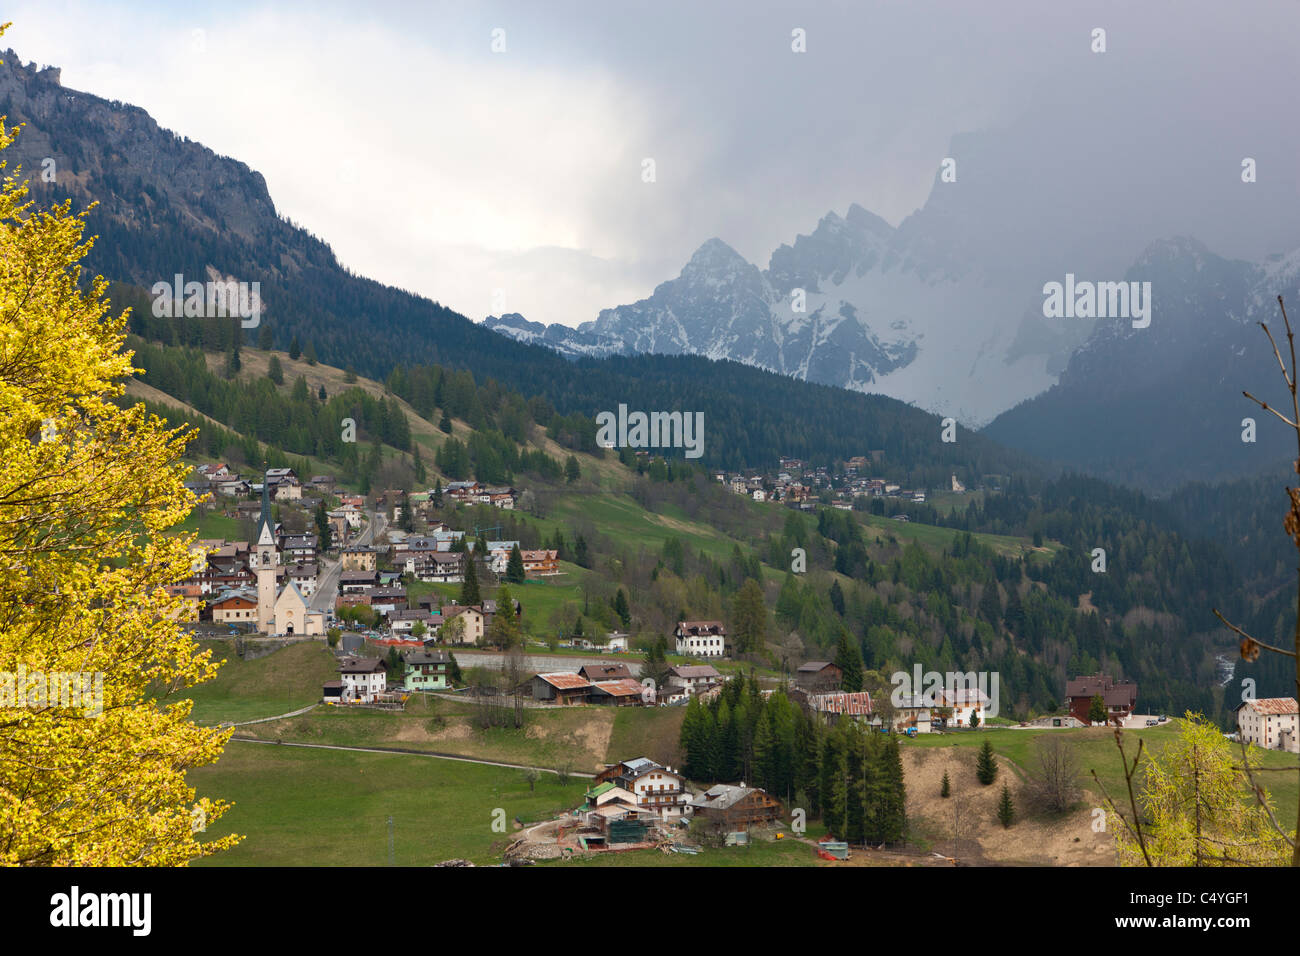 Selva Di Cadore and Val Fiorentina towards M. Mondeval, Vento, Dolomites, Italy, Europy Stock Photo